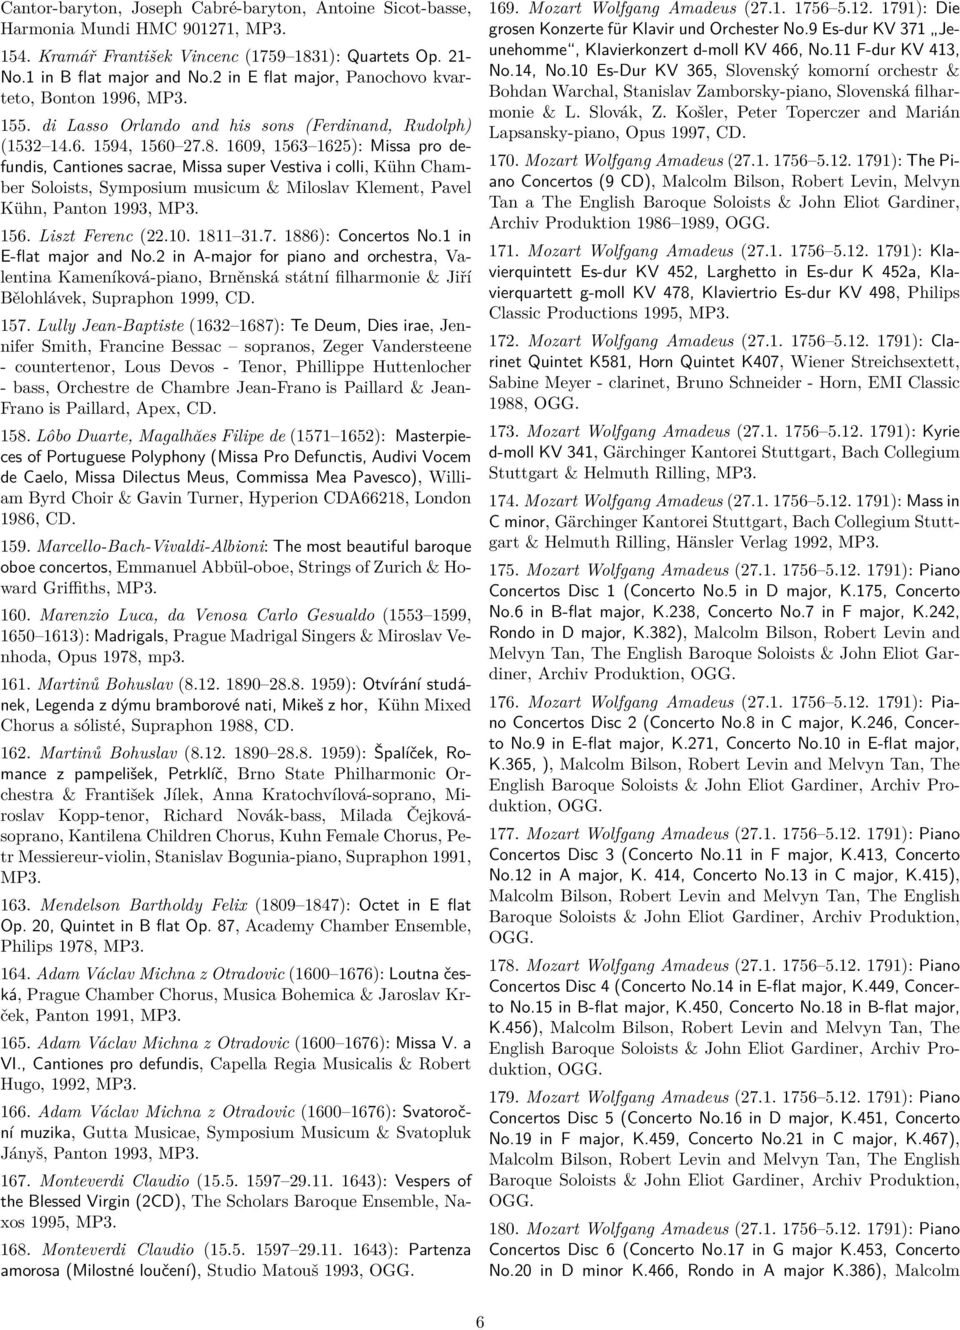 1609, 1563 1625): Missa pro defundis, Cantiones sacrae, Missa super Vestiva i colli, Kühn Chamber Soloists, Symposium musicum & Miloslav Klement, Pavel Kühn, Panton 1993, MP3. 156. Liszt Ferenc (22.